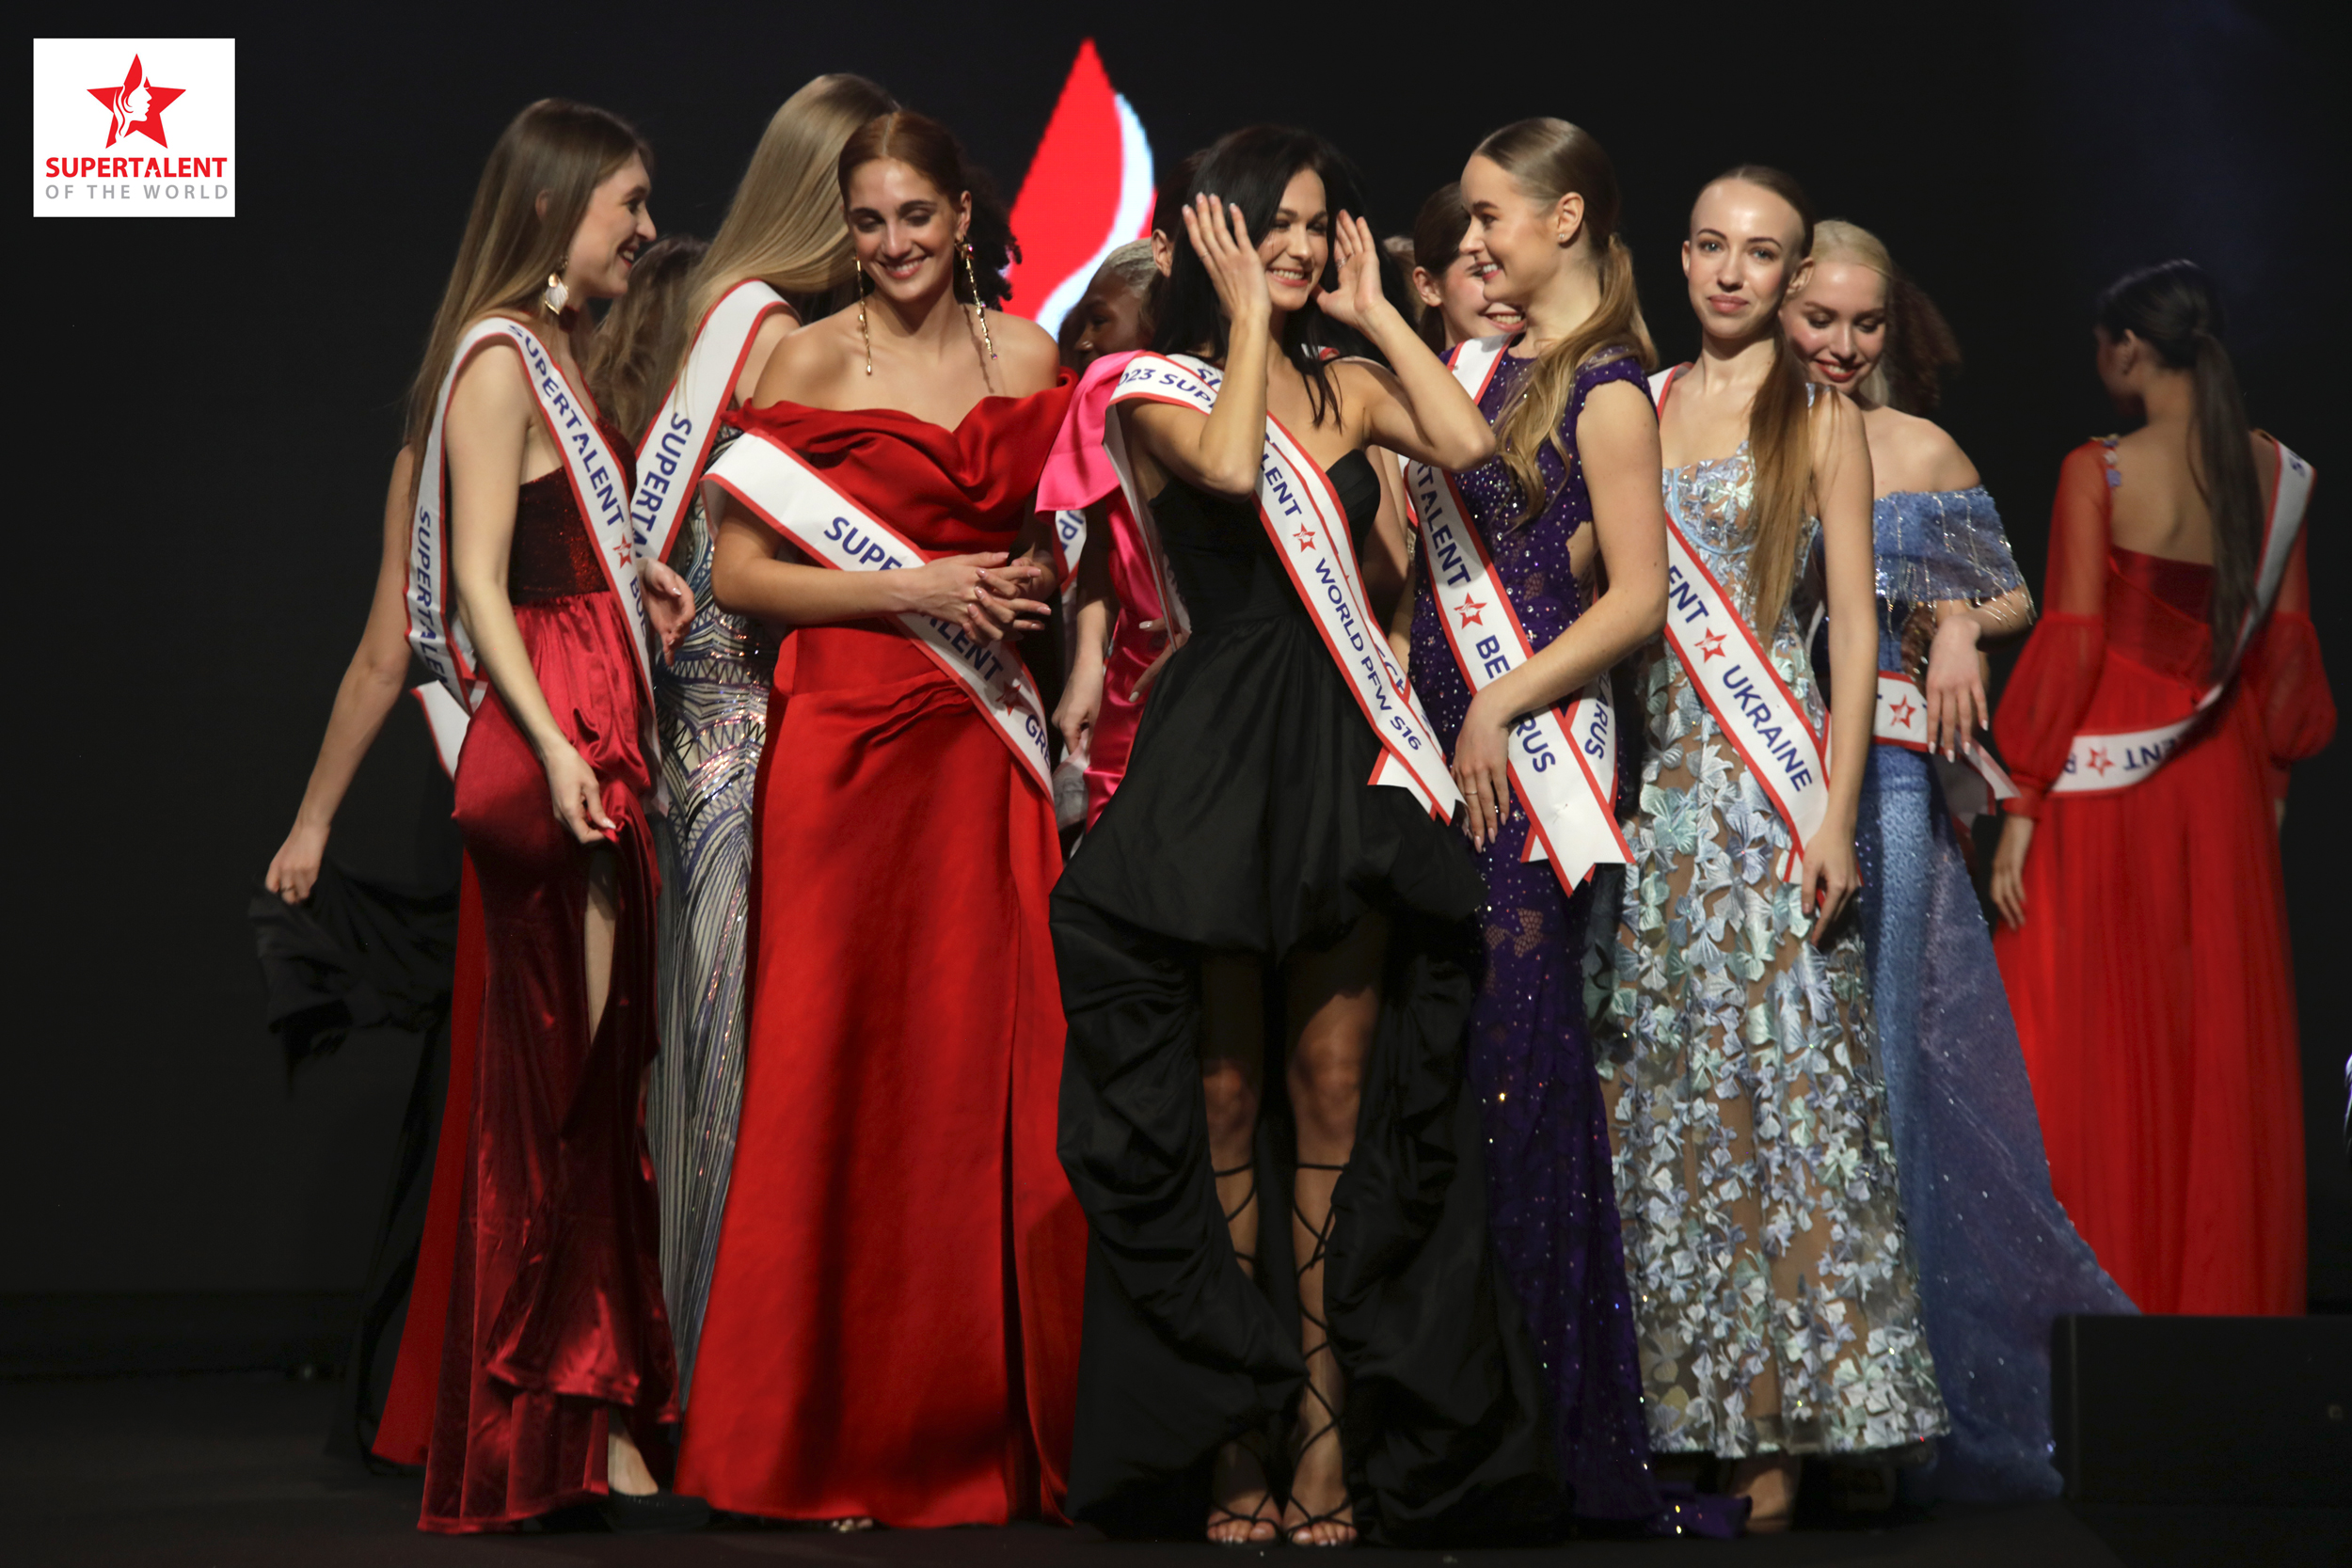 PARIS FASHION WEEK 23 - FASHION WEEK - MISS SUPER TALENT OF THE WORLD - Edition 16 - Miss Czechia Anna Marie WINNER